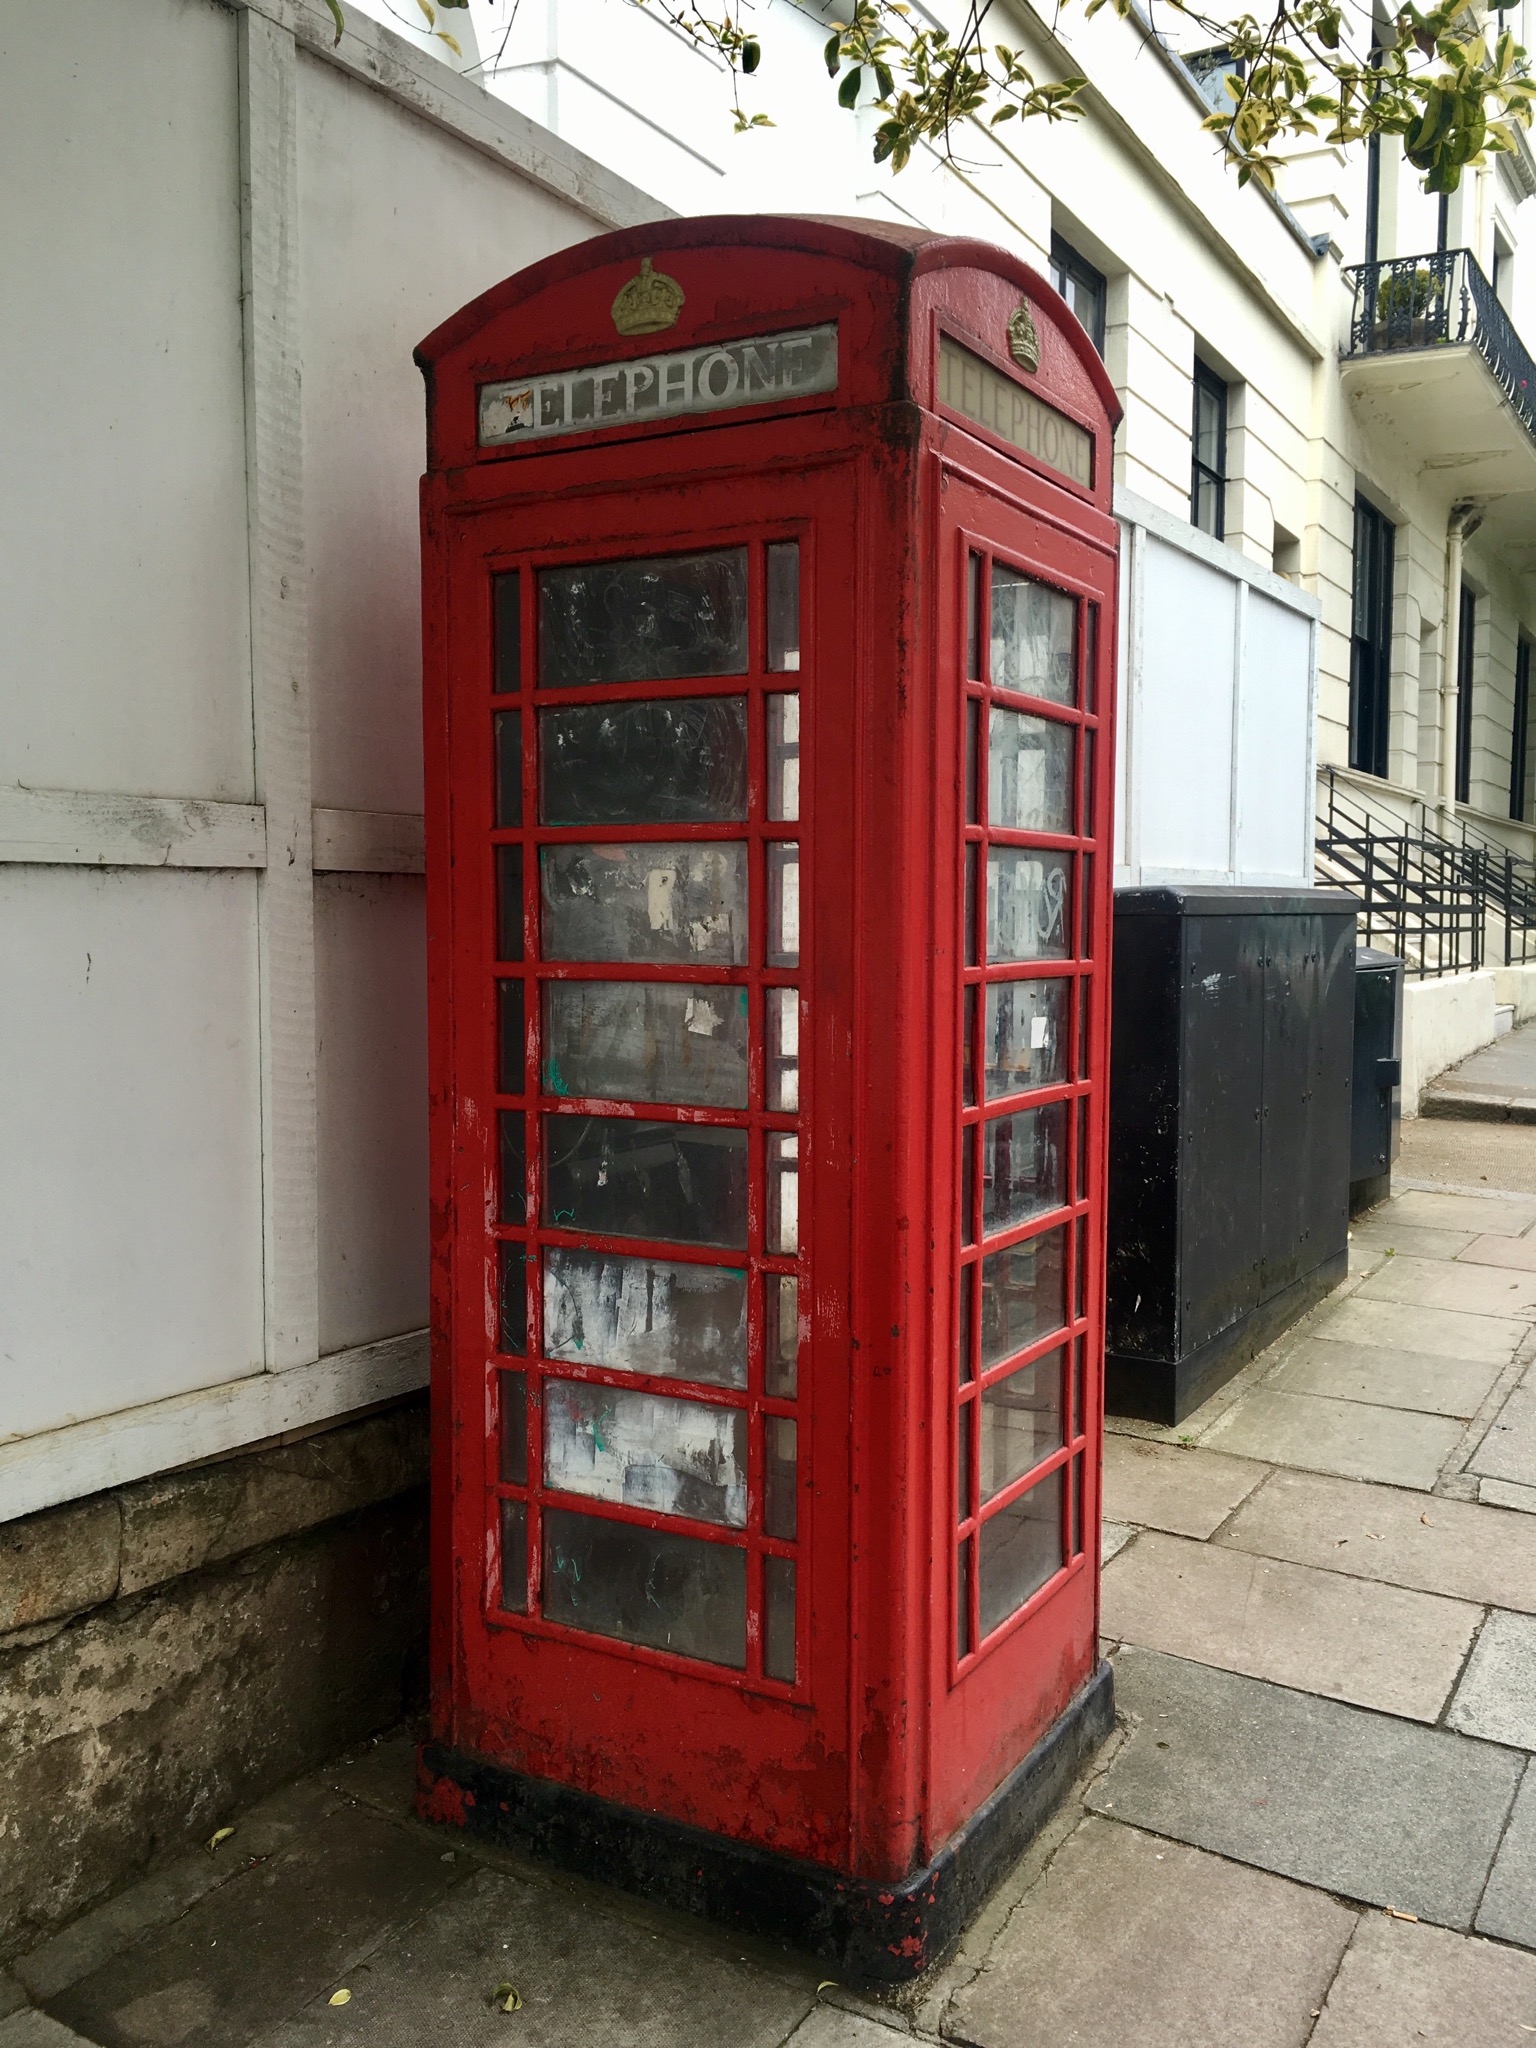 Телефон 6 30. England telephone Kiosk.